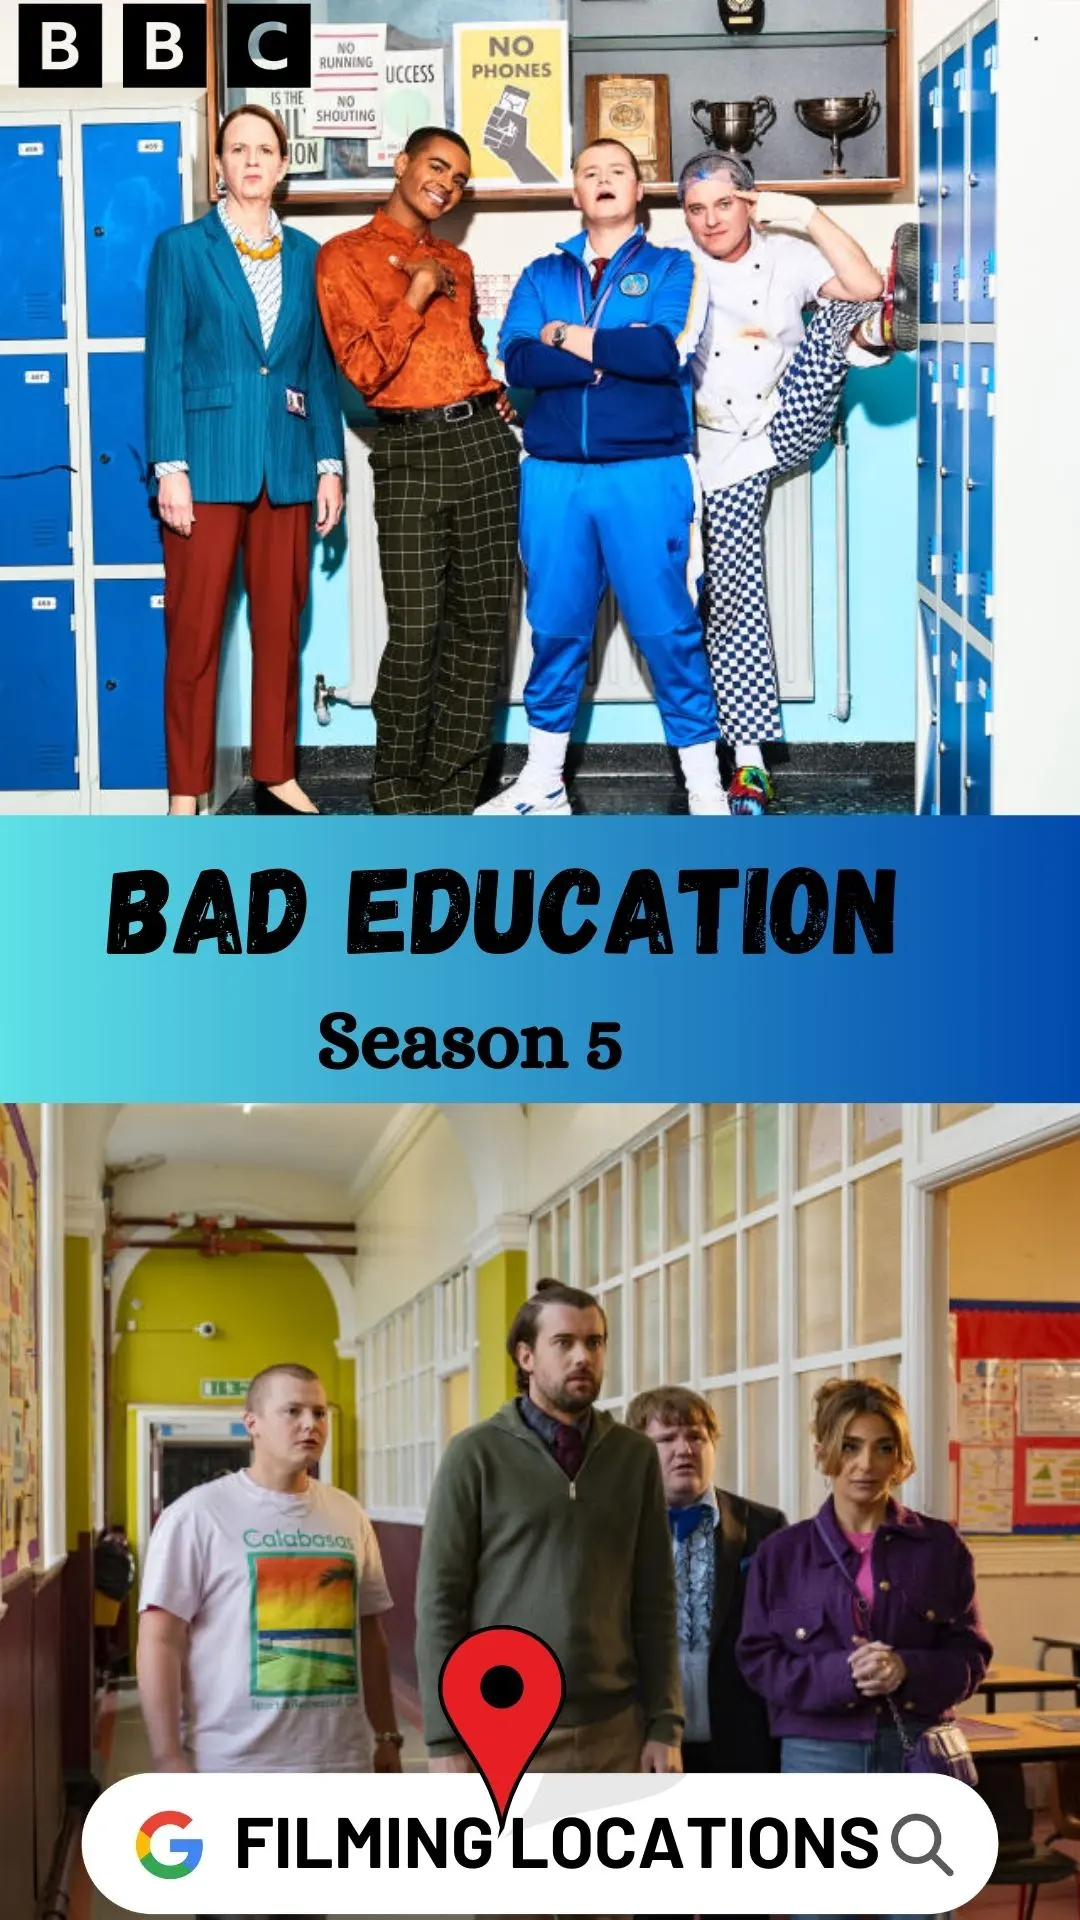 Bad Education Season 5 Filming Locations